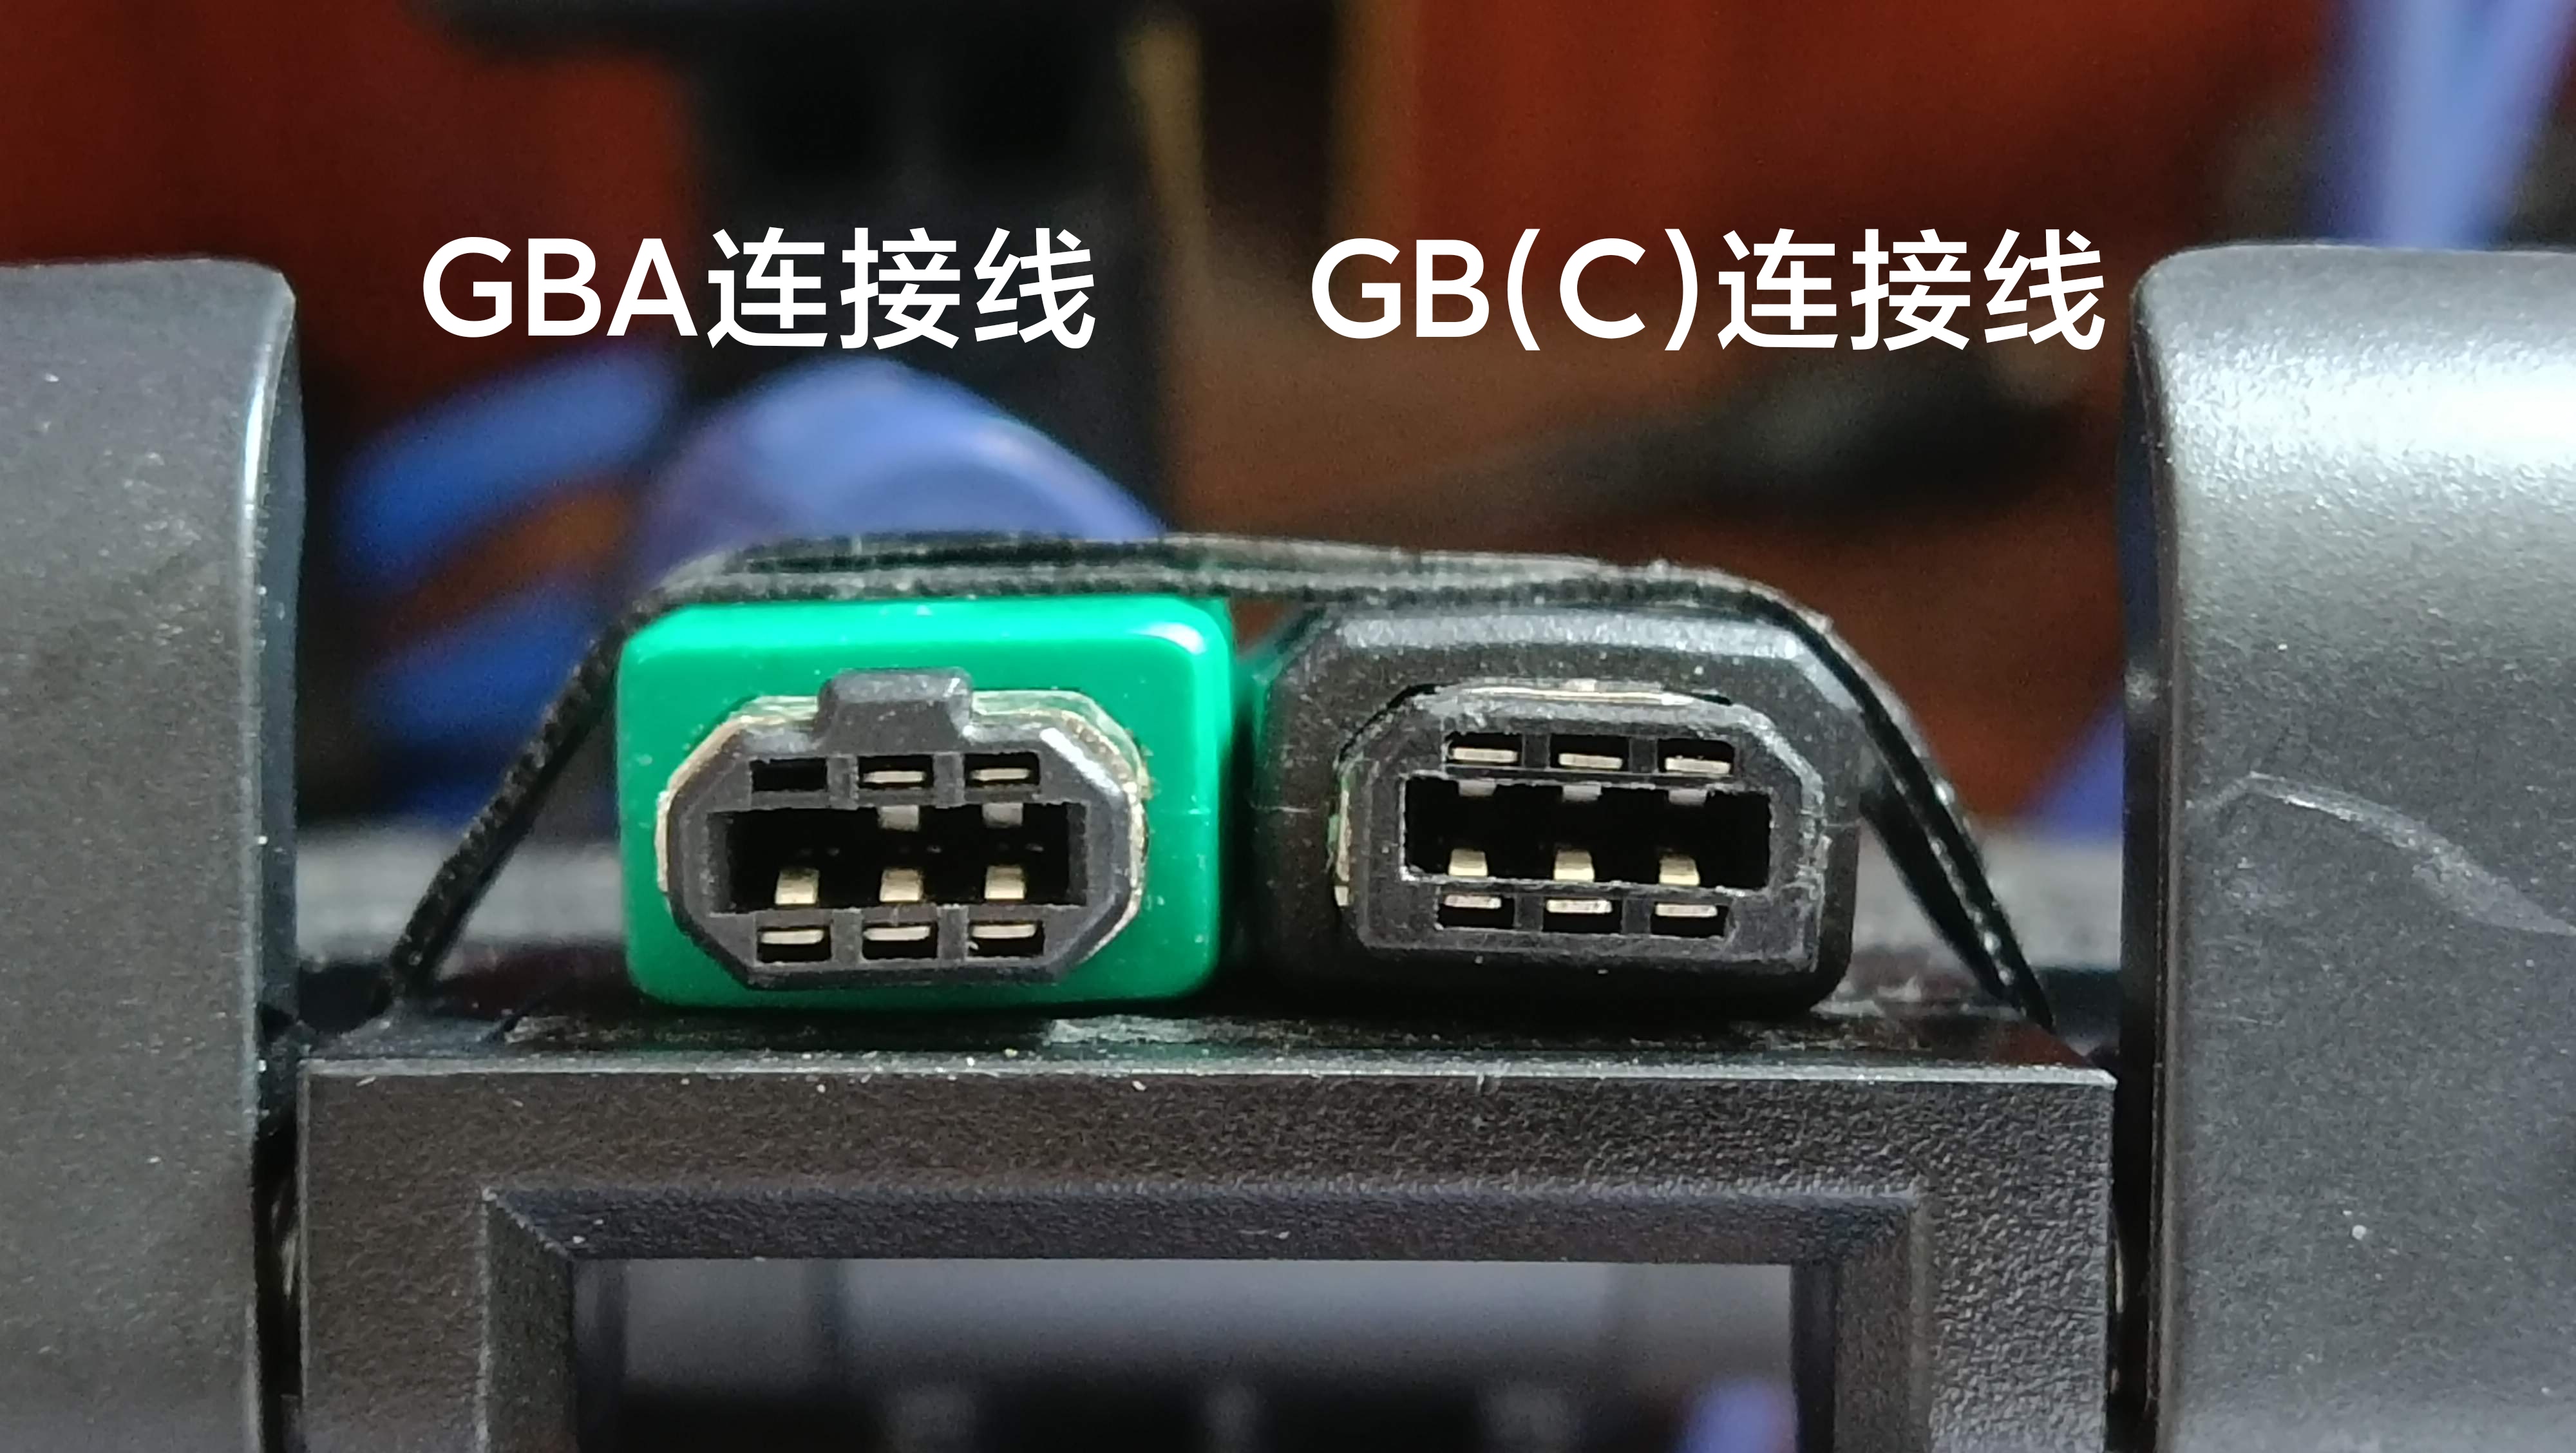 gb-gba link new.jpg